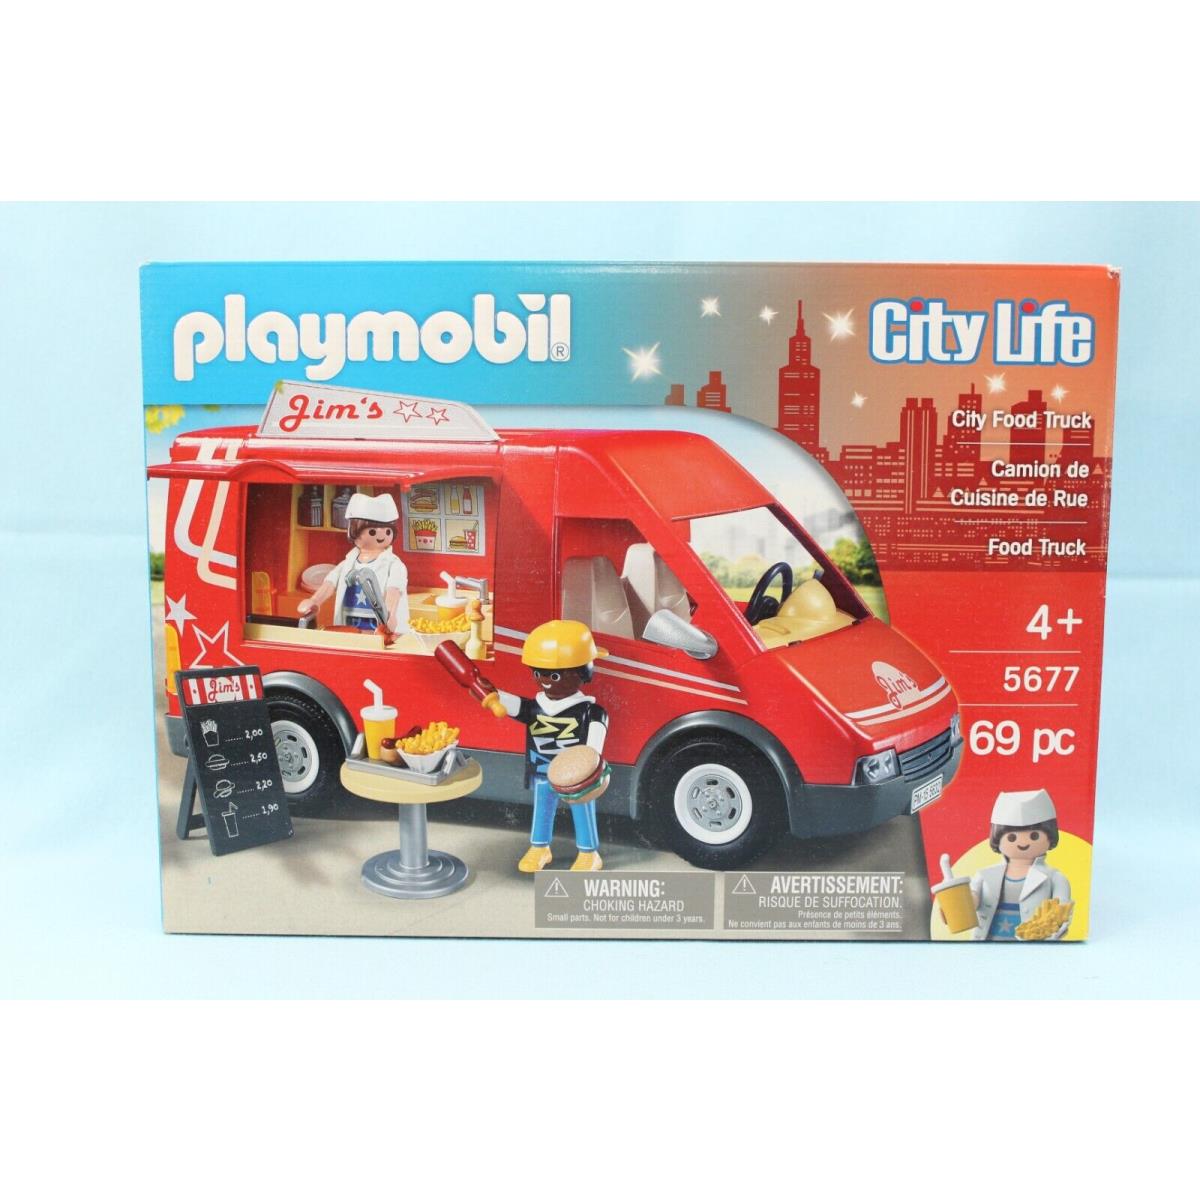 Playmobil 5677 City Food Truck City Life 69pc